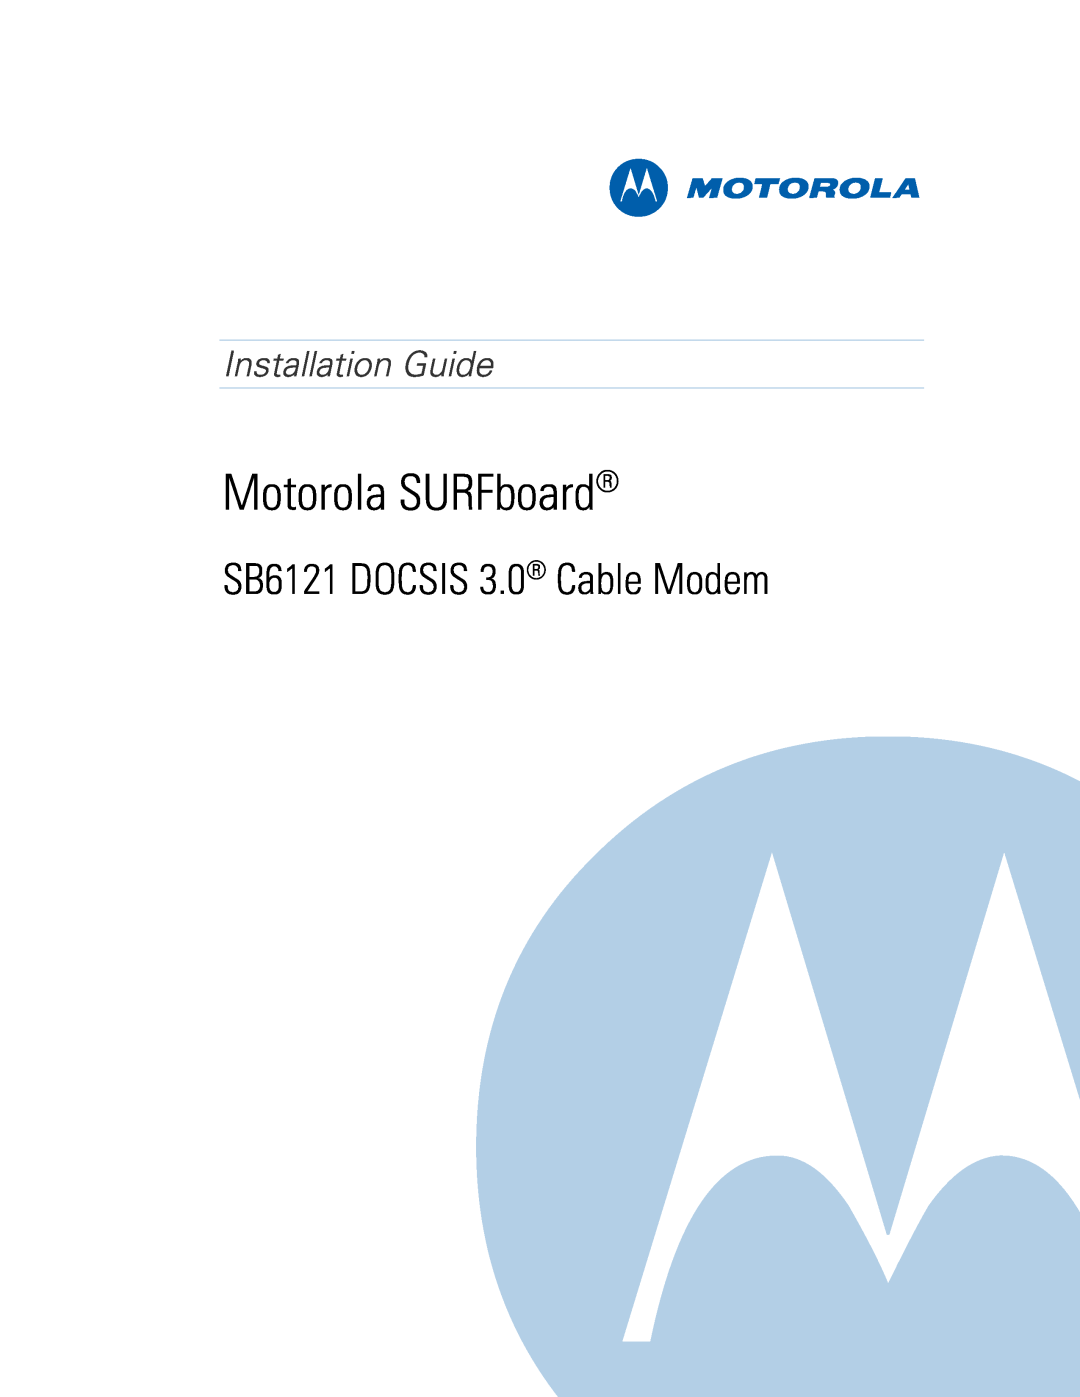 Motorola 575319-019-00 manual Motorola SURFboard, SB6121 DOCSIS 3.0 Cable Modem, Installation Guide 